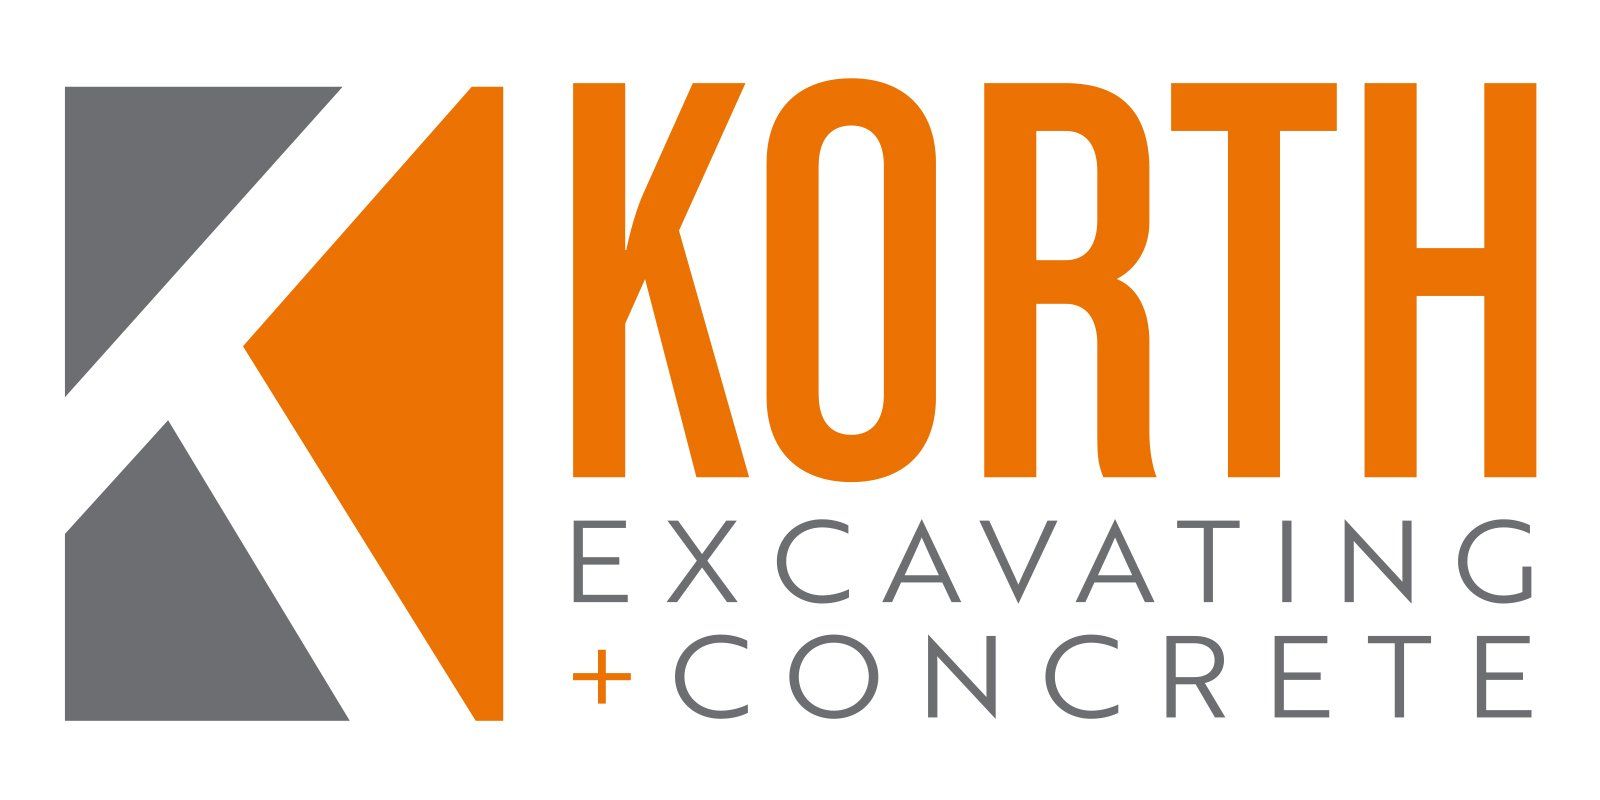 Korth Excavating and Concrete logo